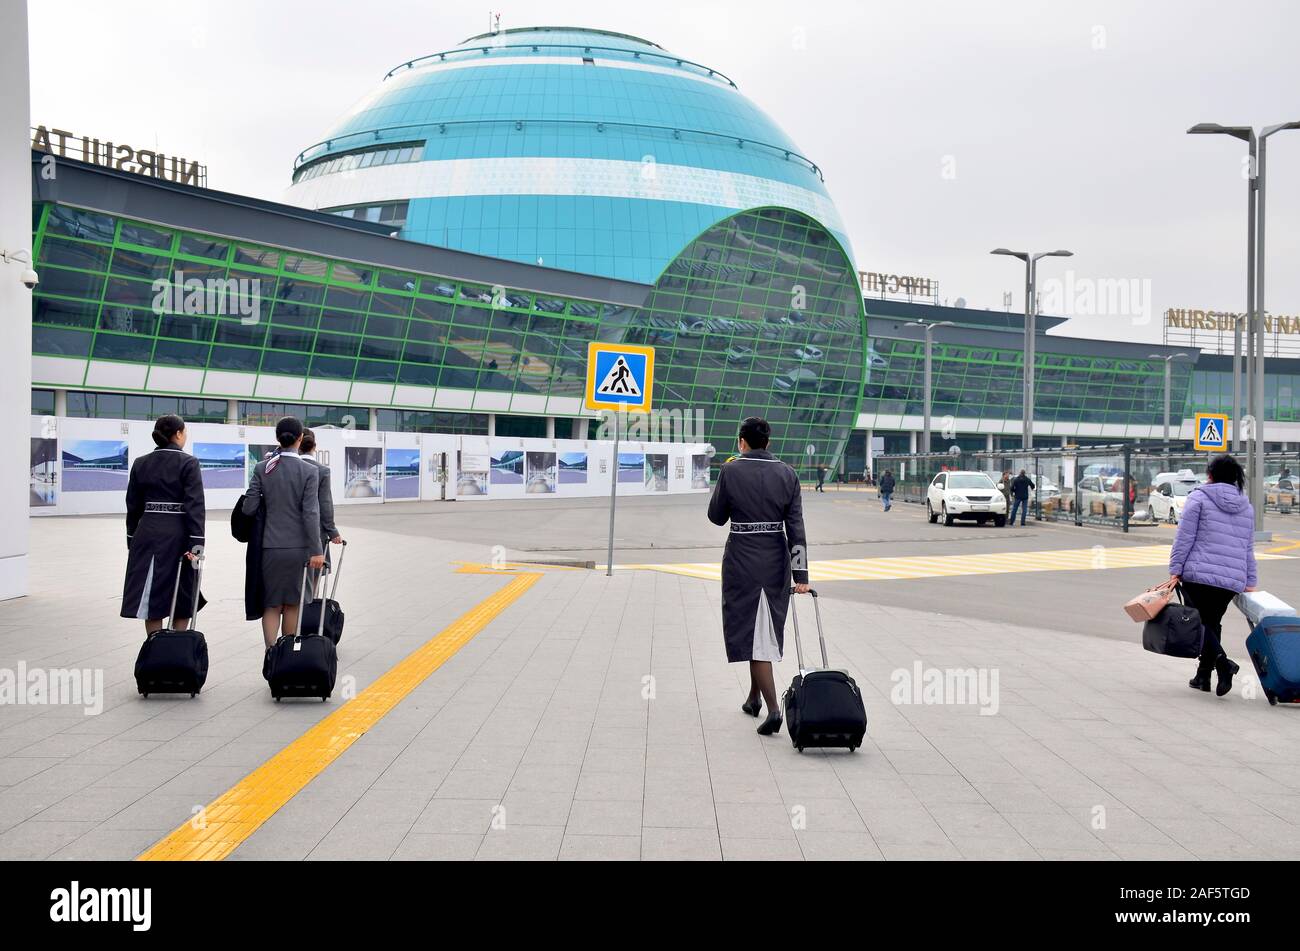 building airport Nursultan Kazakhstan, Stock Photo